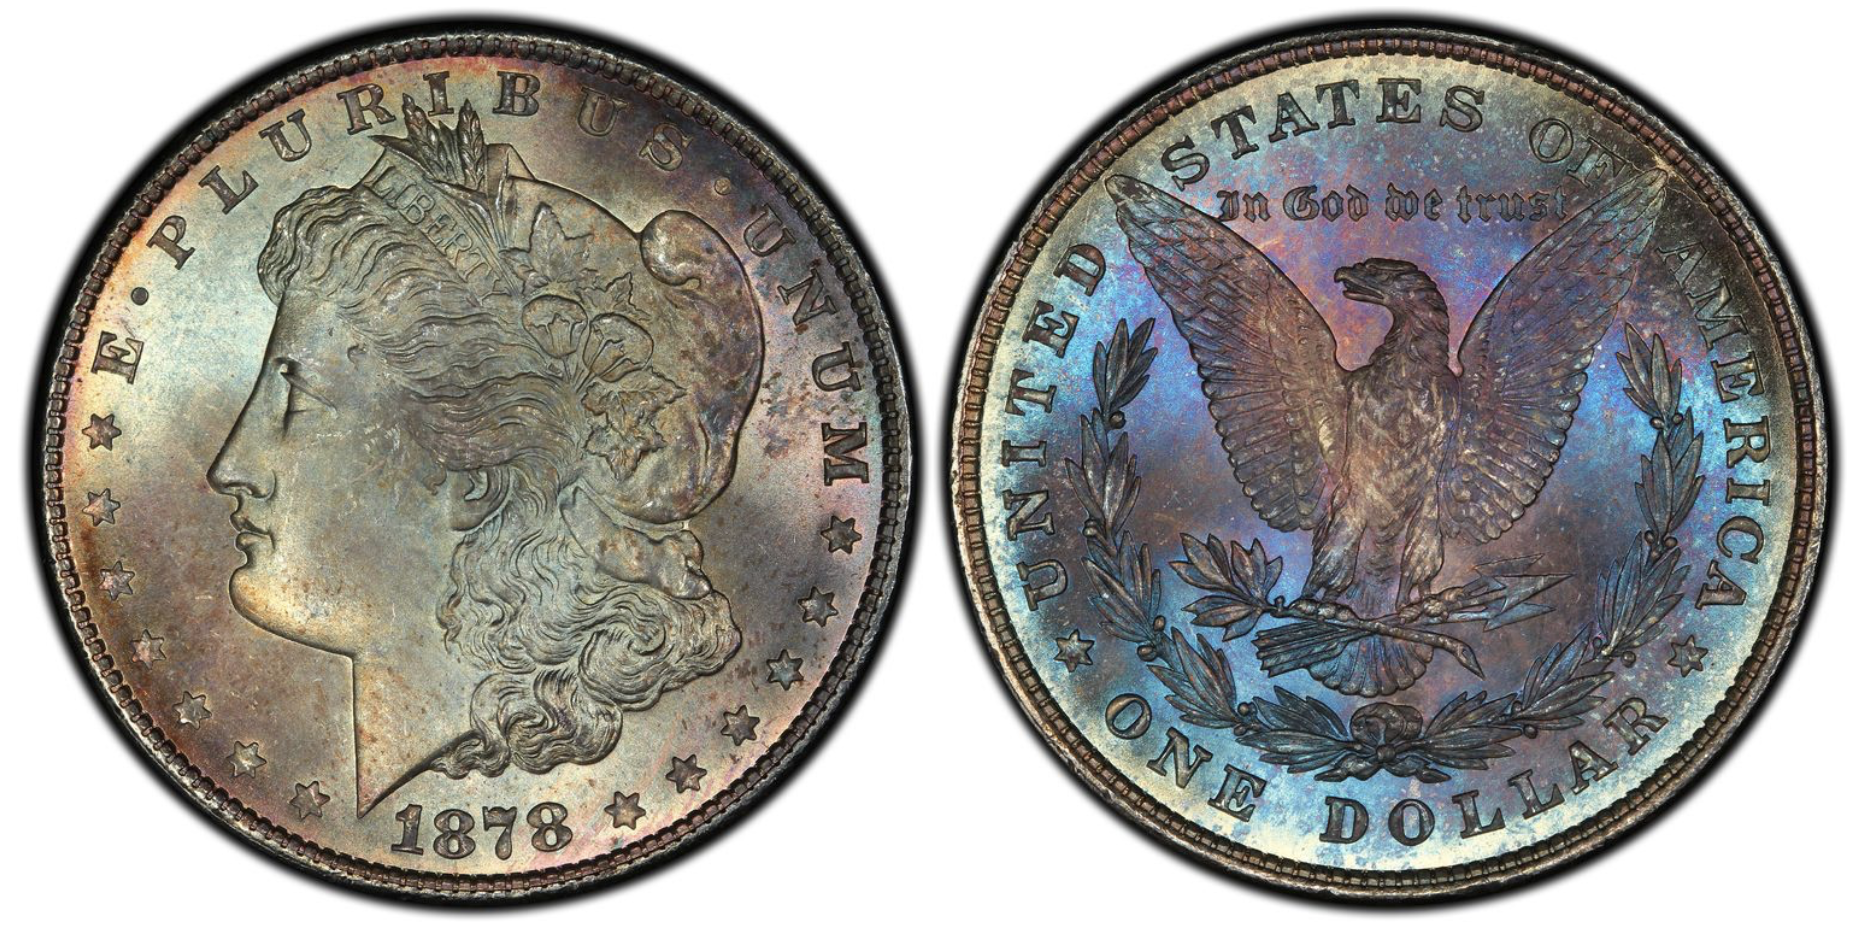 Rare Morgan Silver Dollars